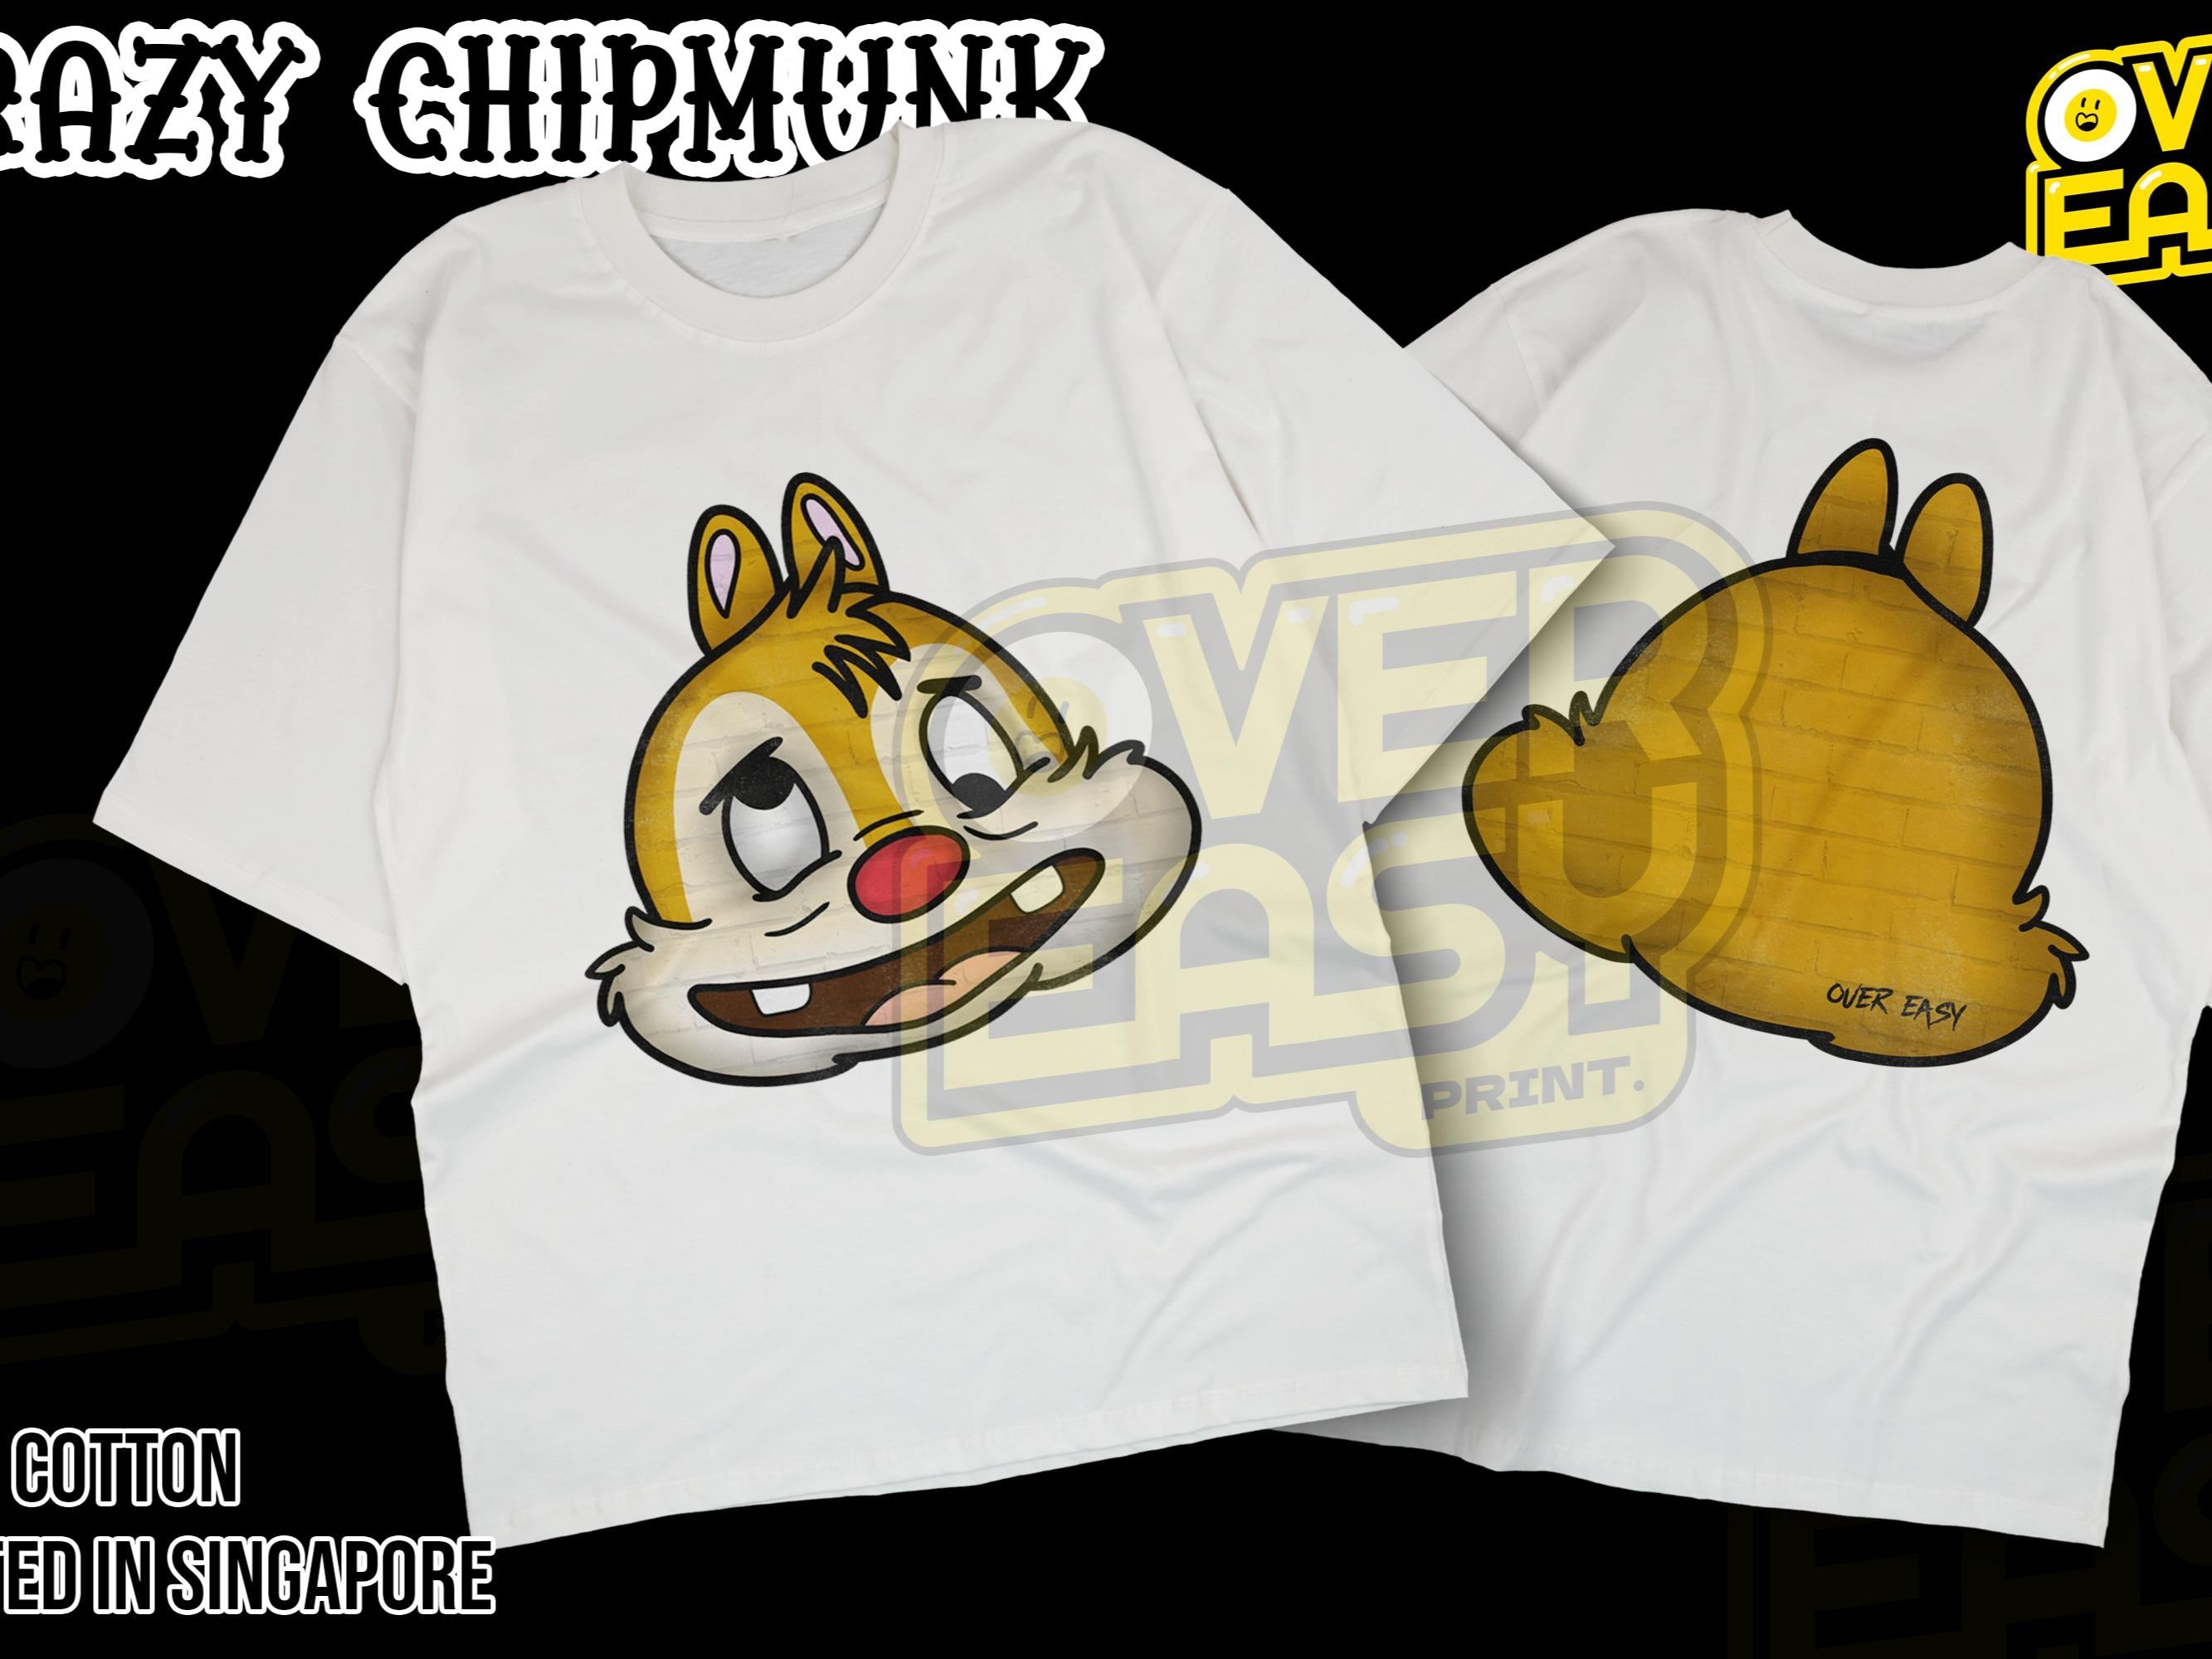 Crazy Chipmunk T-Shirt